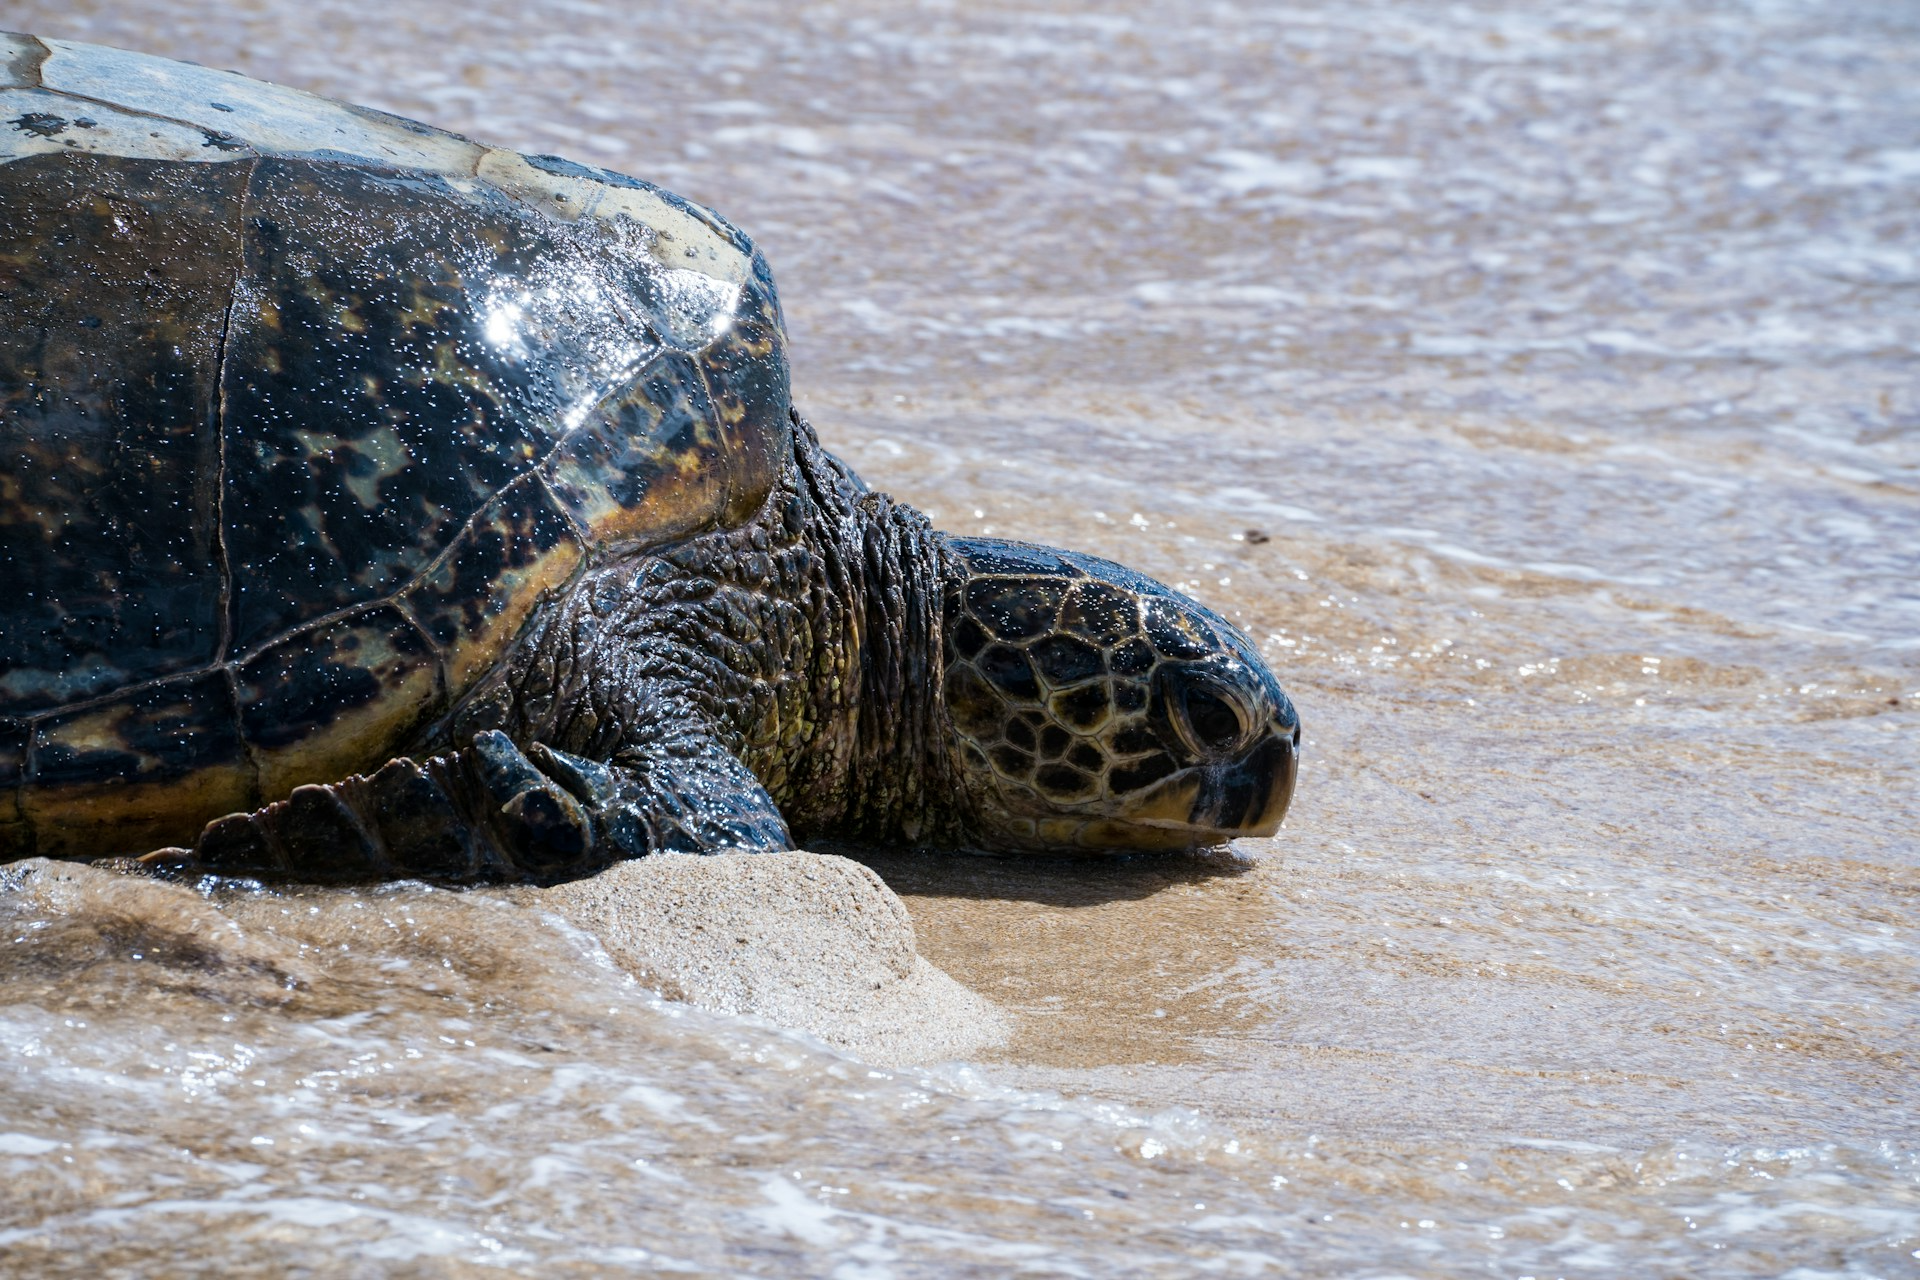 Best Beaches To Spot Sea Turtles